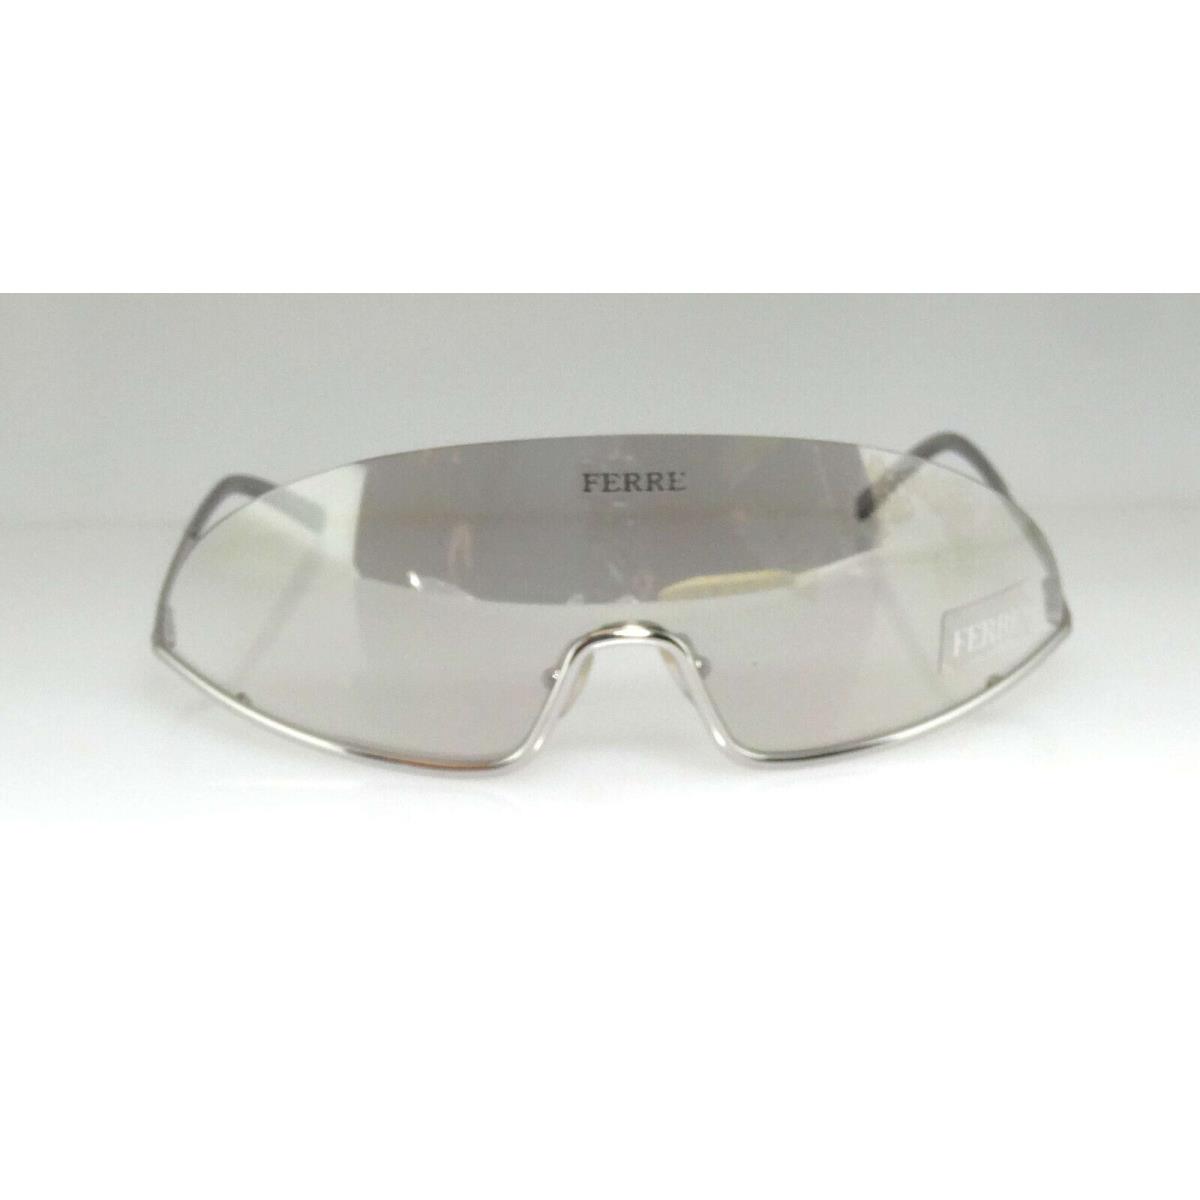 Gianfranco Ferre Space Walker Sunglasses GF-50505 Rare Vintage